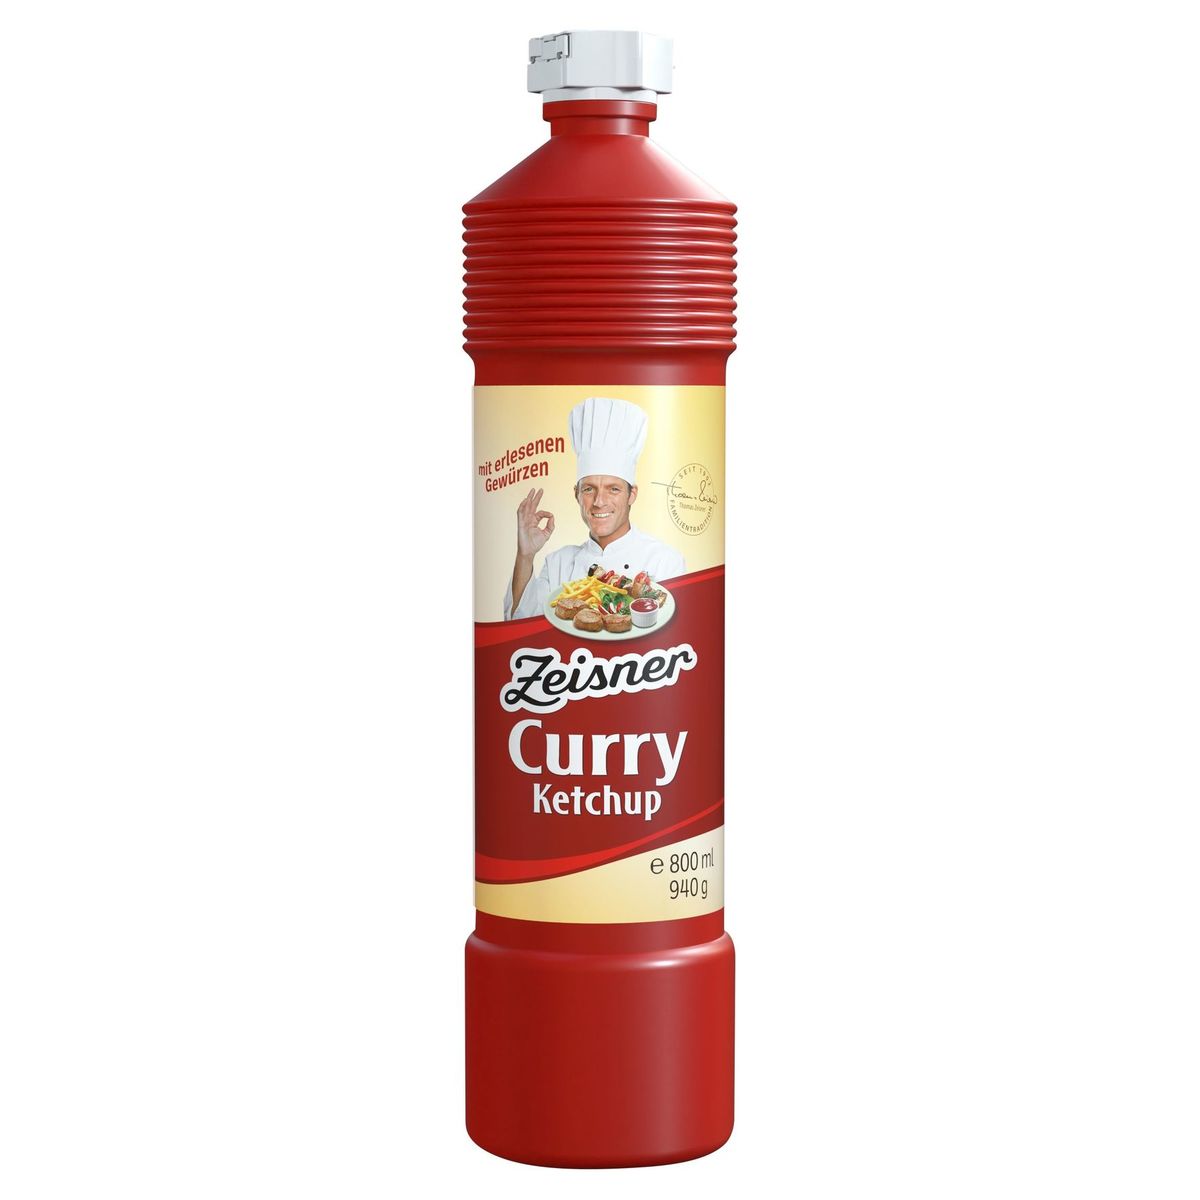 Zeisner Curry Ketchup 940 g